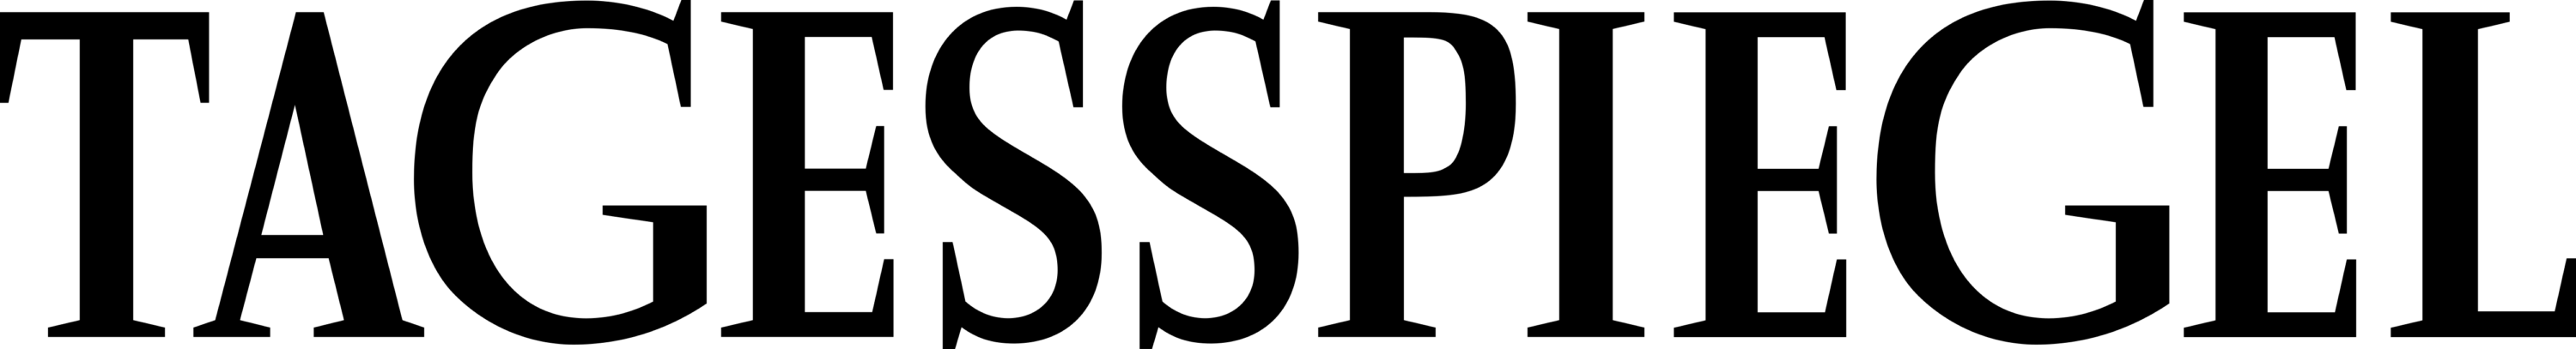 Der Tagesspiegel Logo text horizontal